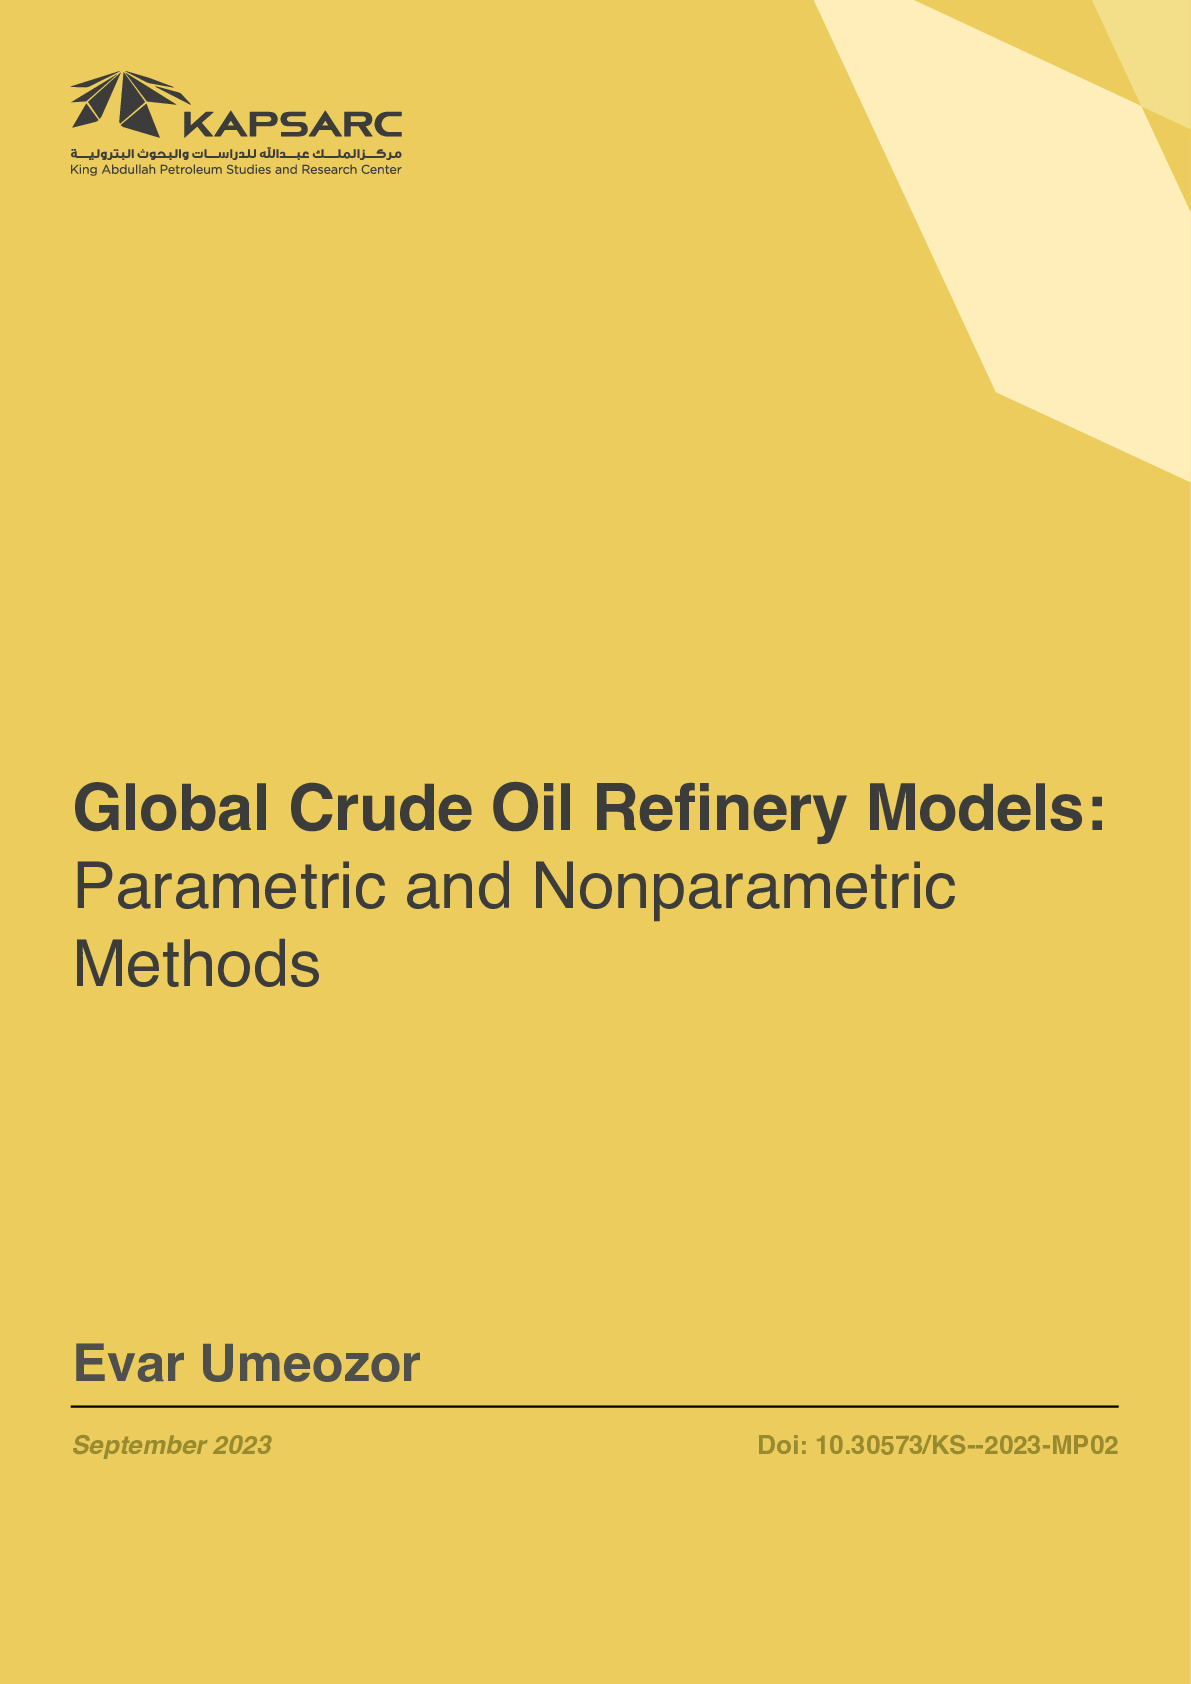 Global Crude Oil Refinery Models: Parametric and Nonparametric Methods